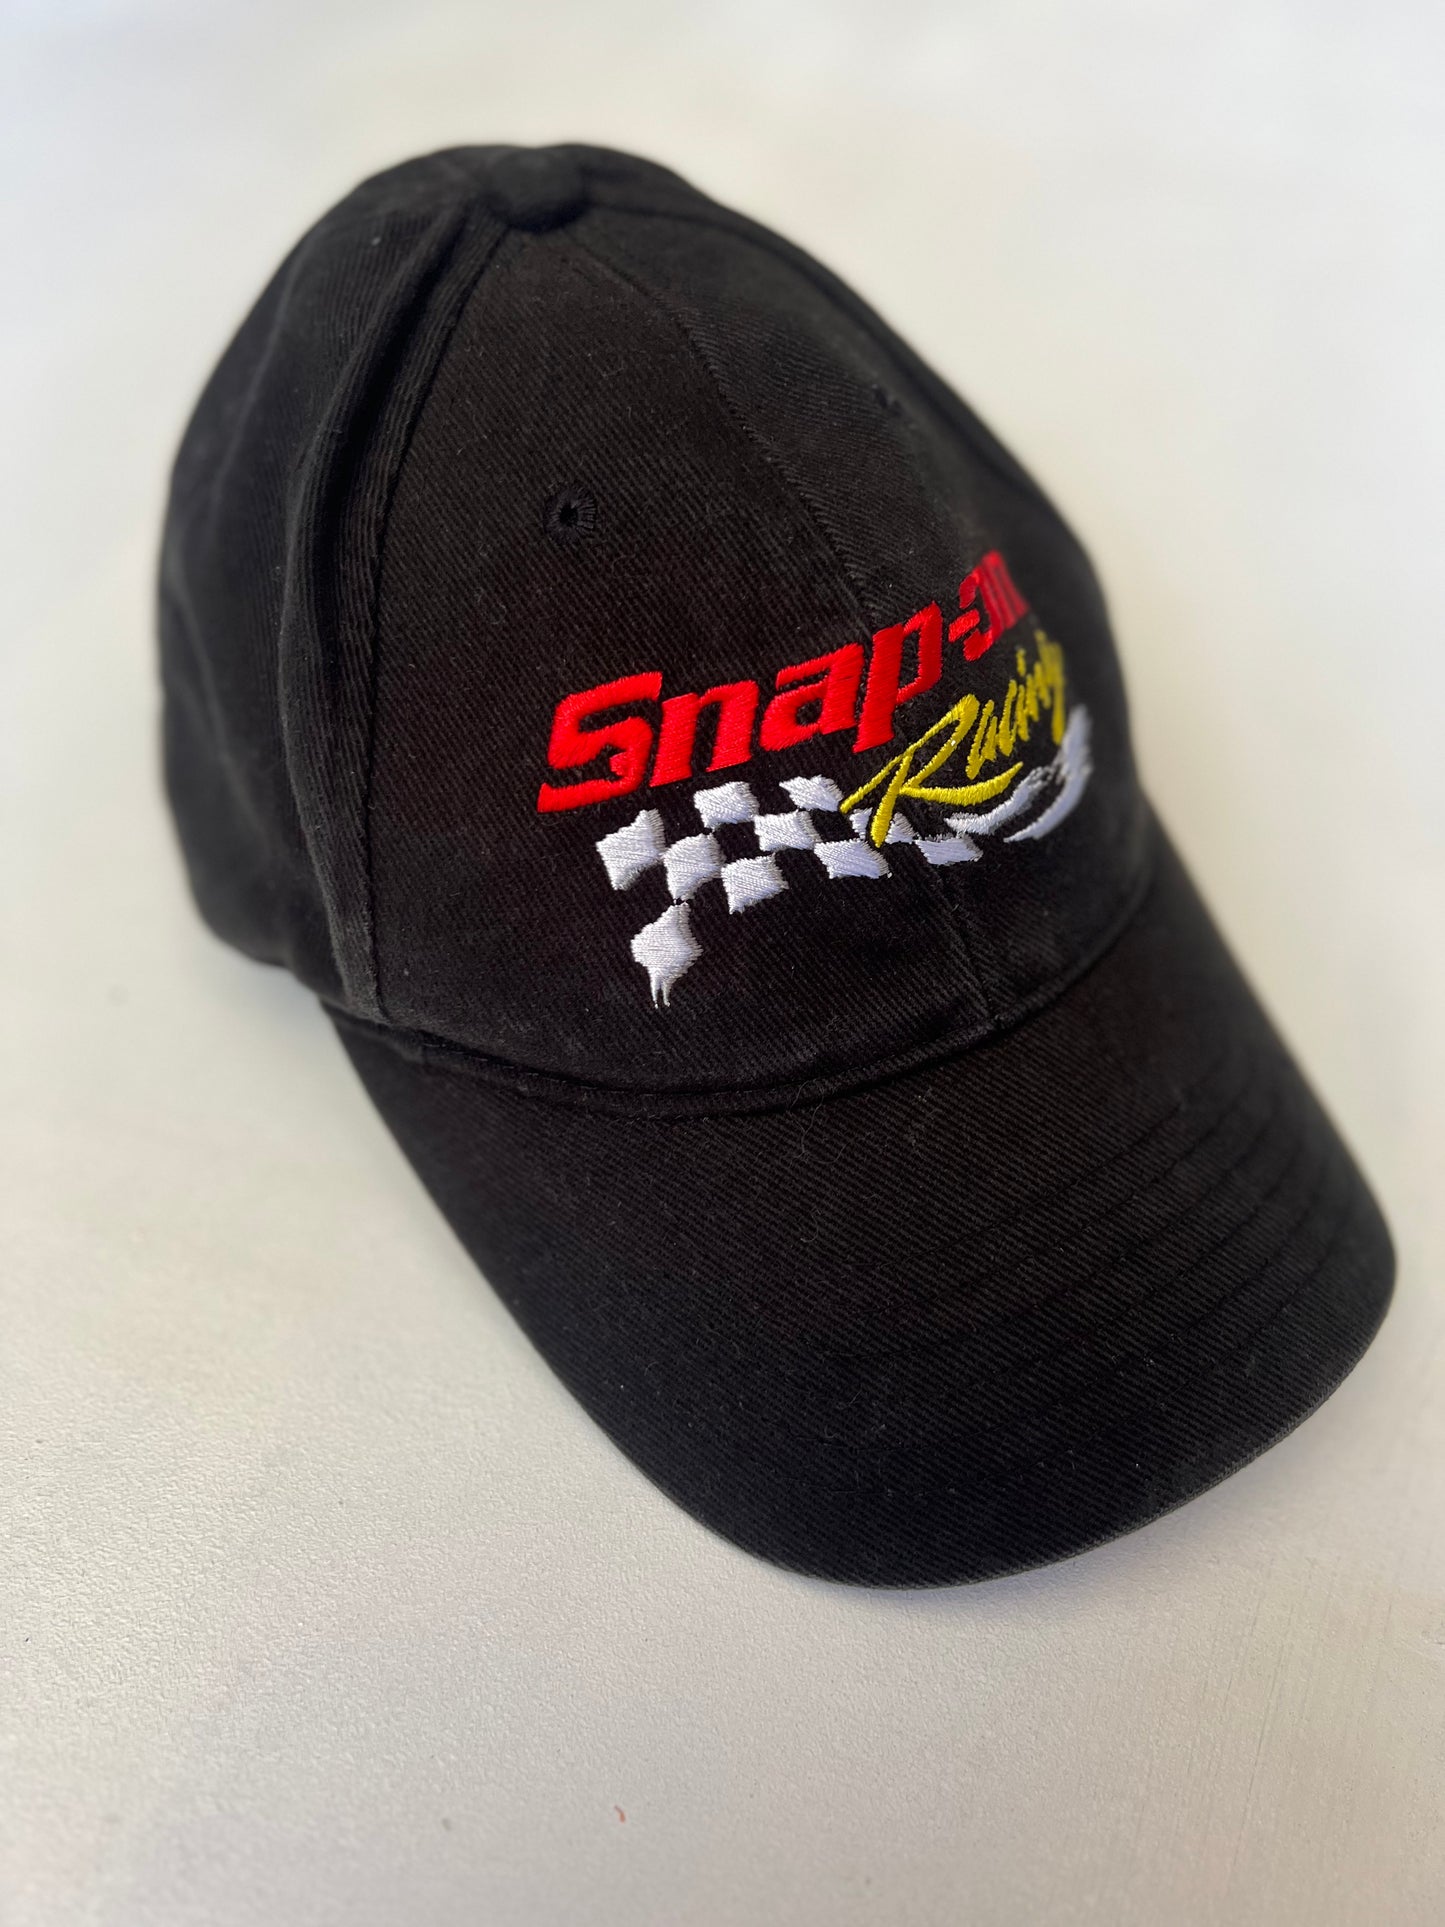 Snap-on Racing Hat - Black